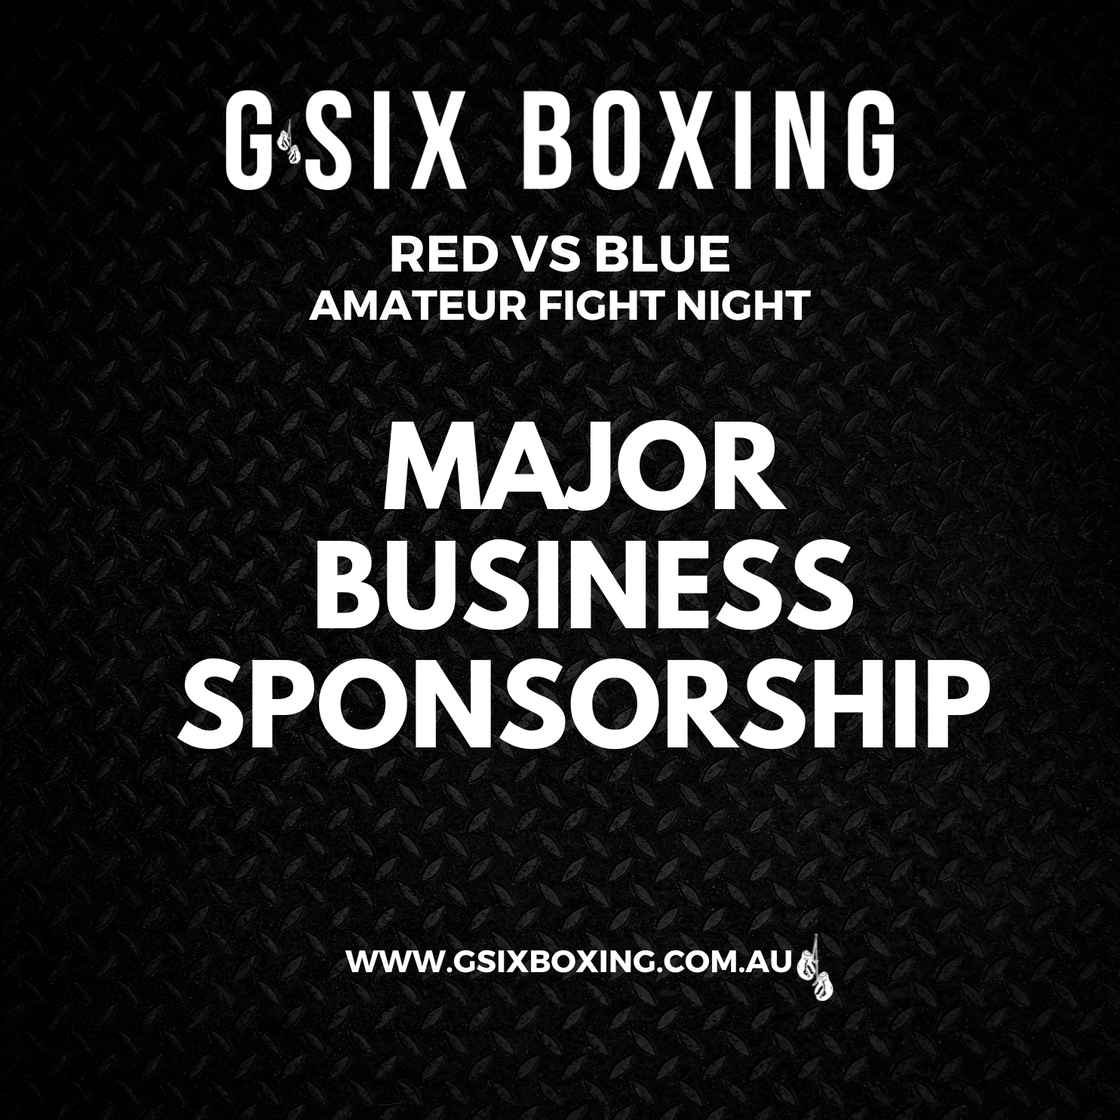 Major Business Red vs Blue Sponsorship!